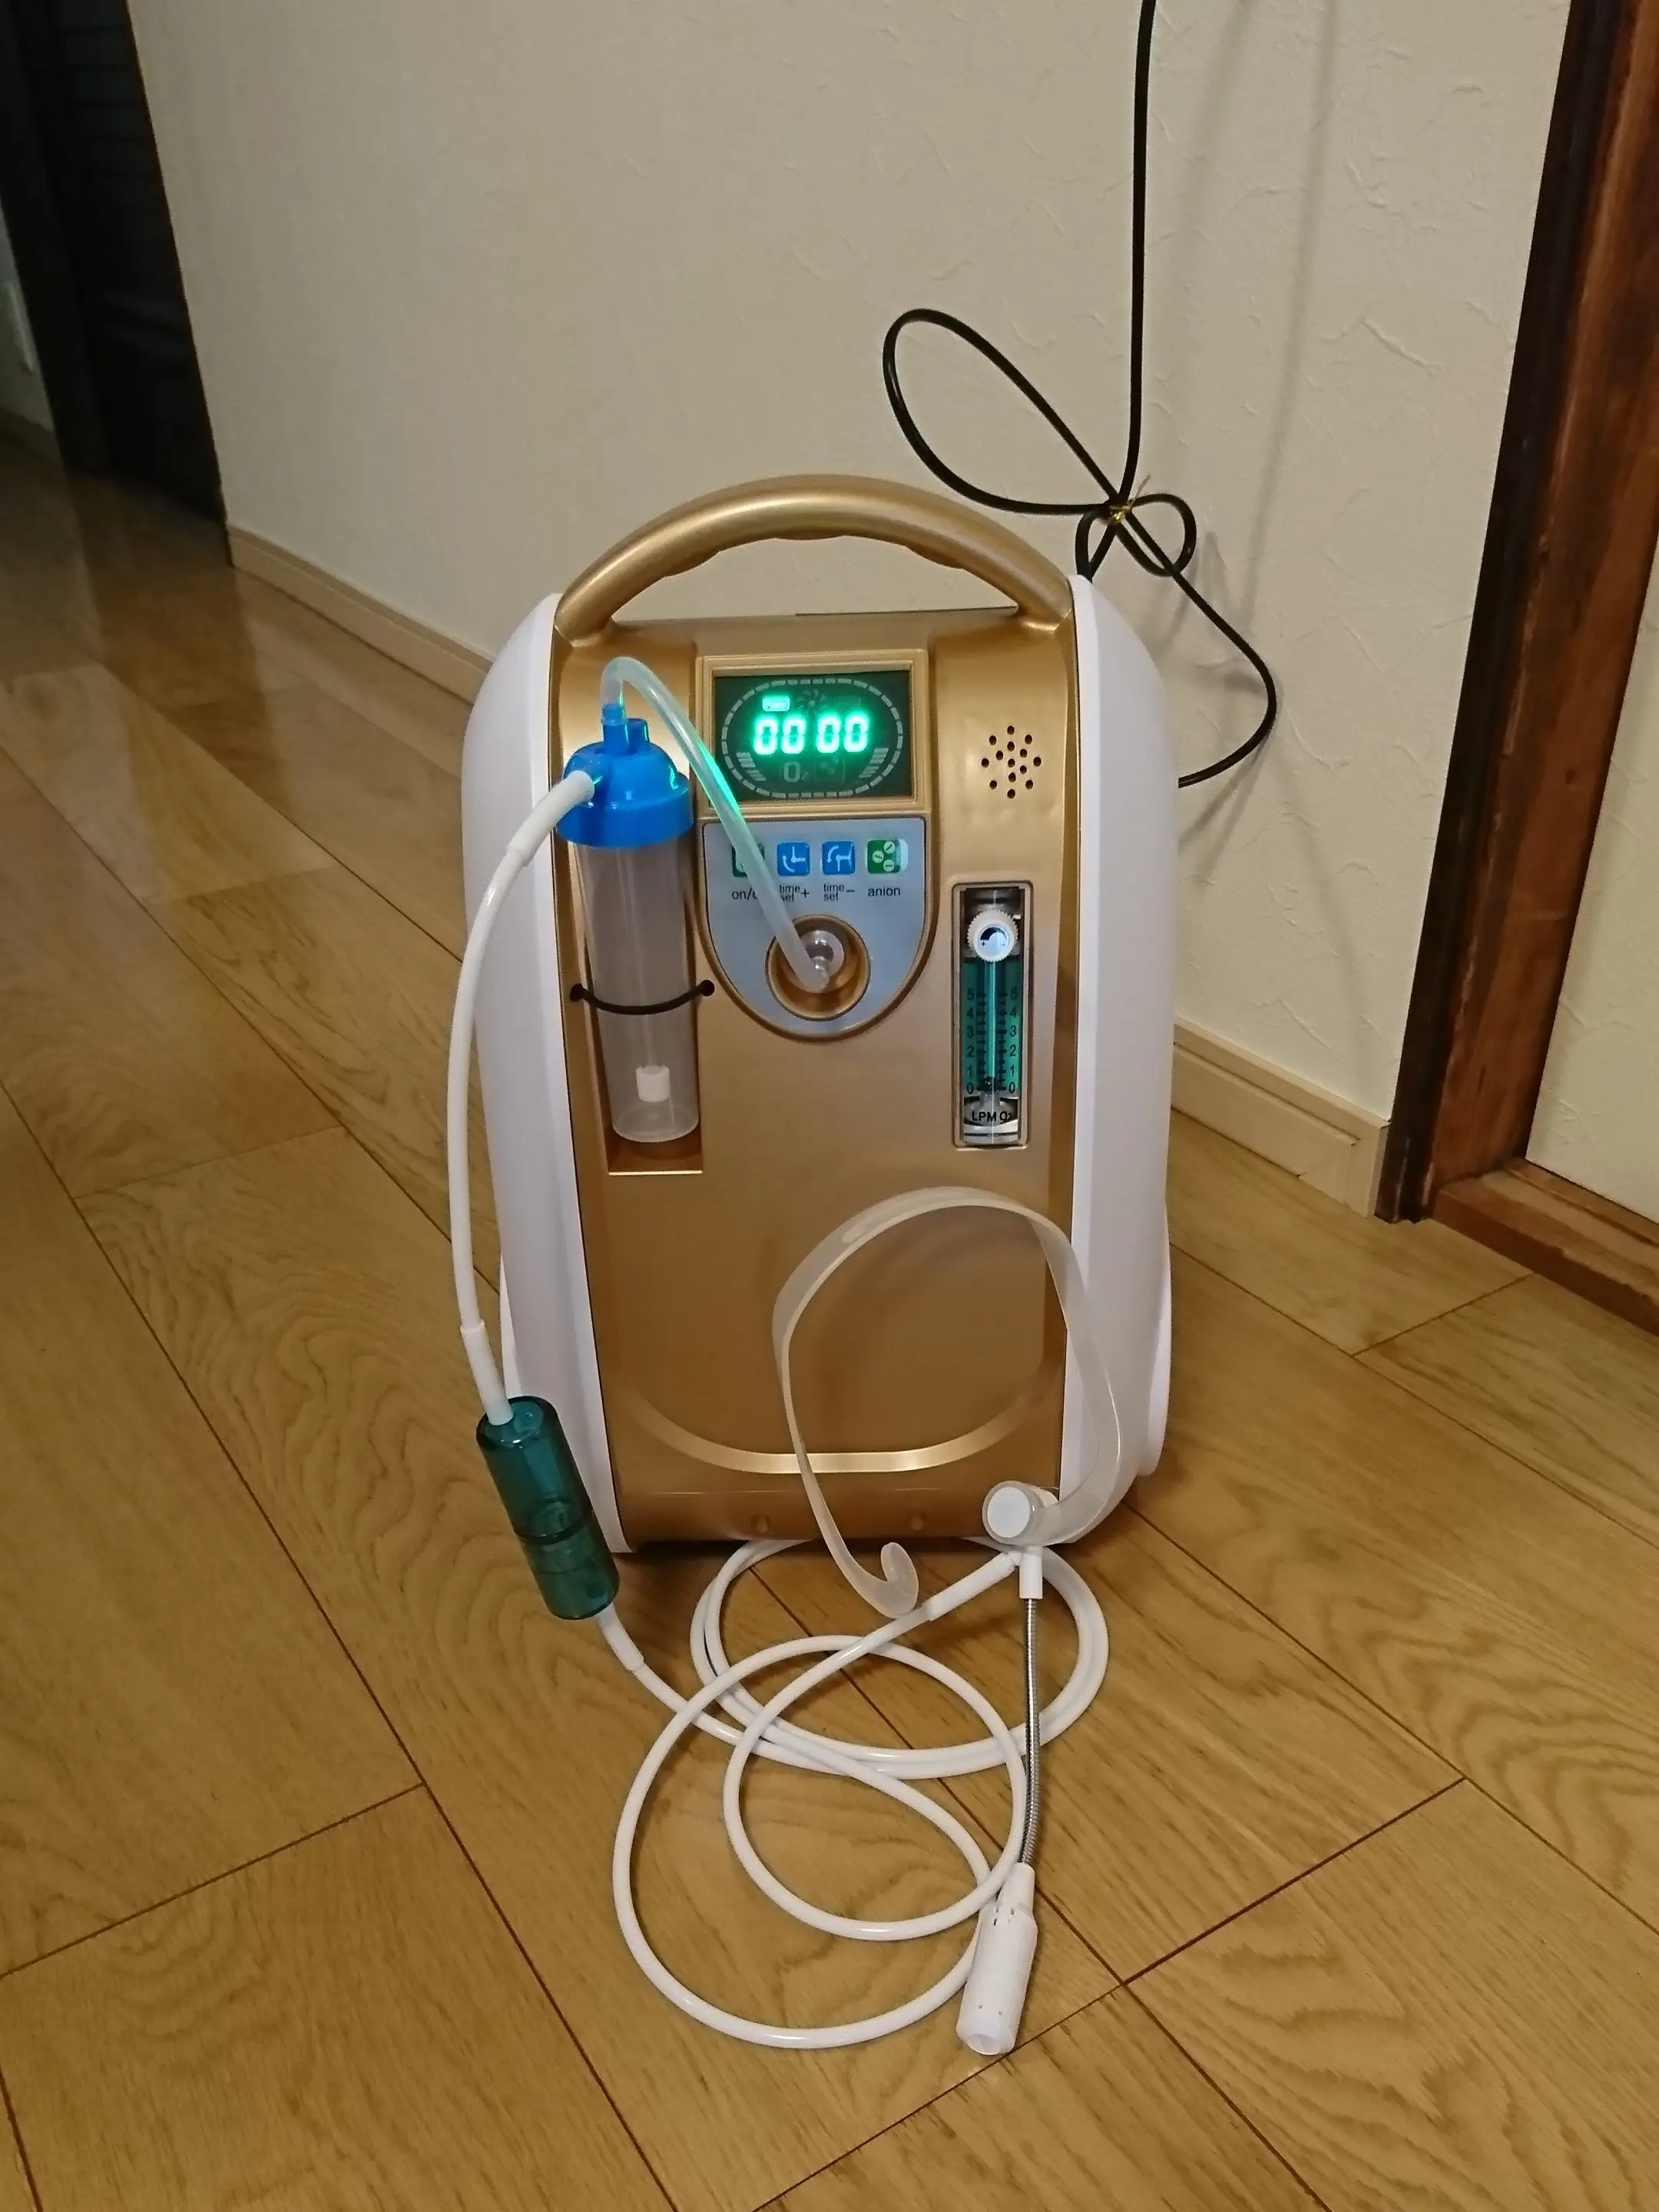 OLV-10H Sport Hypoxic Machine Best High Altitude Oxygen Concentrator